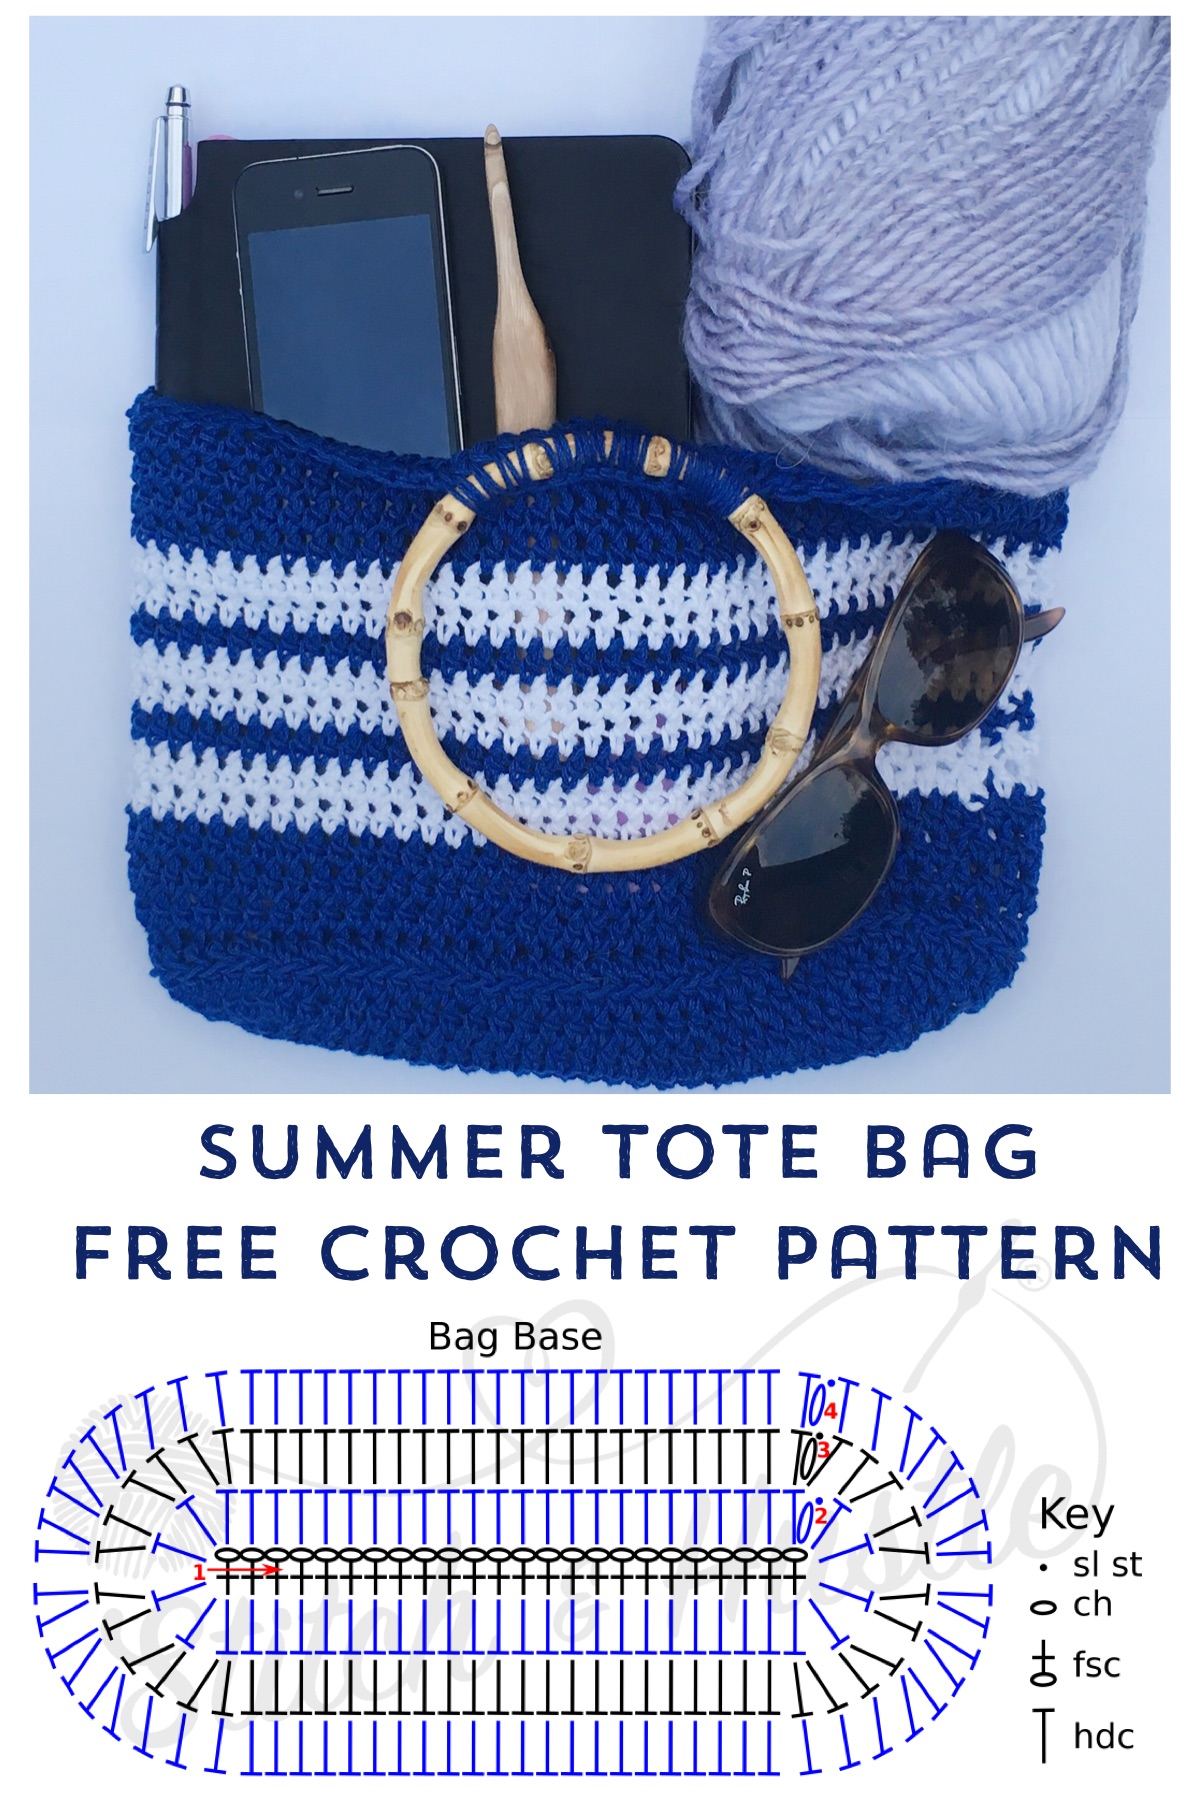 DIY Crochet Bag Oval Nails Bottom Shaper Pad Bag Insert Cushion Base 22*10cm